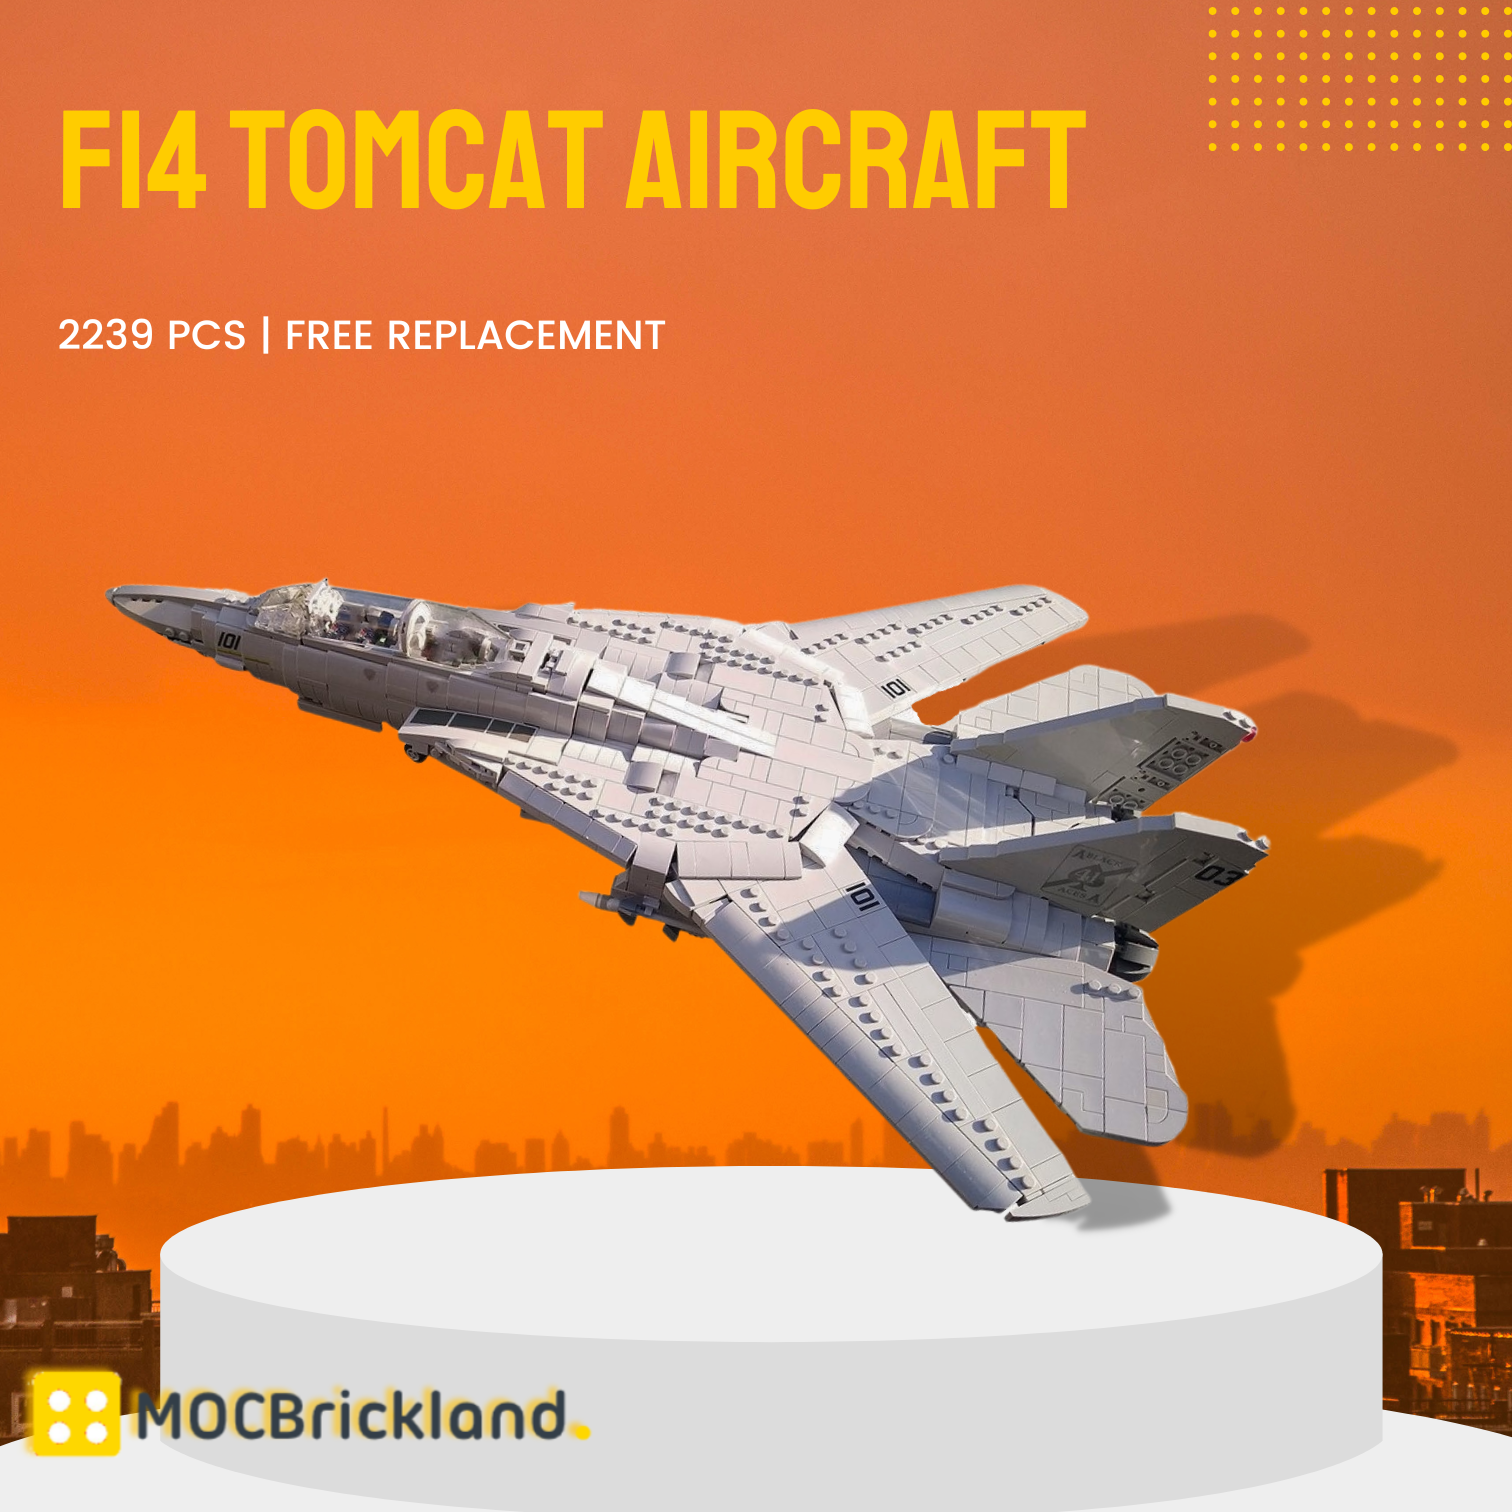 F14 Tomcat Aircraft MOC-121573 Military With 2239PCS